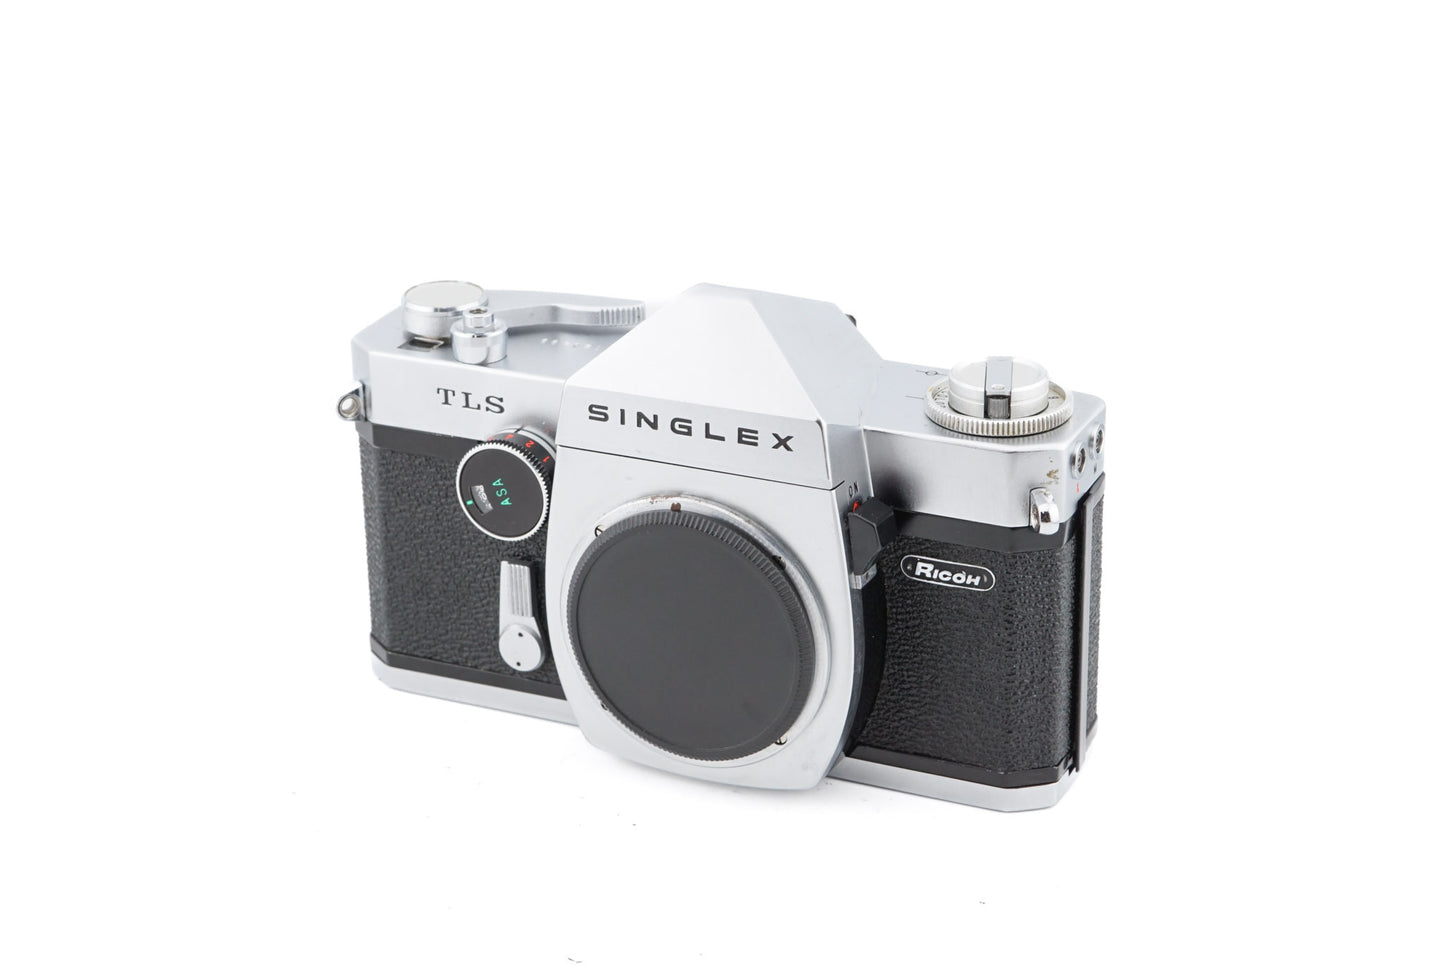 Ricoh Singlex TLS - Camera